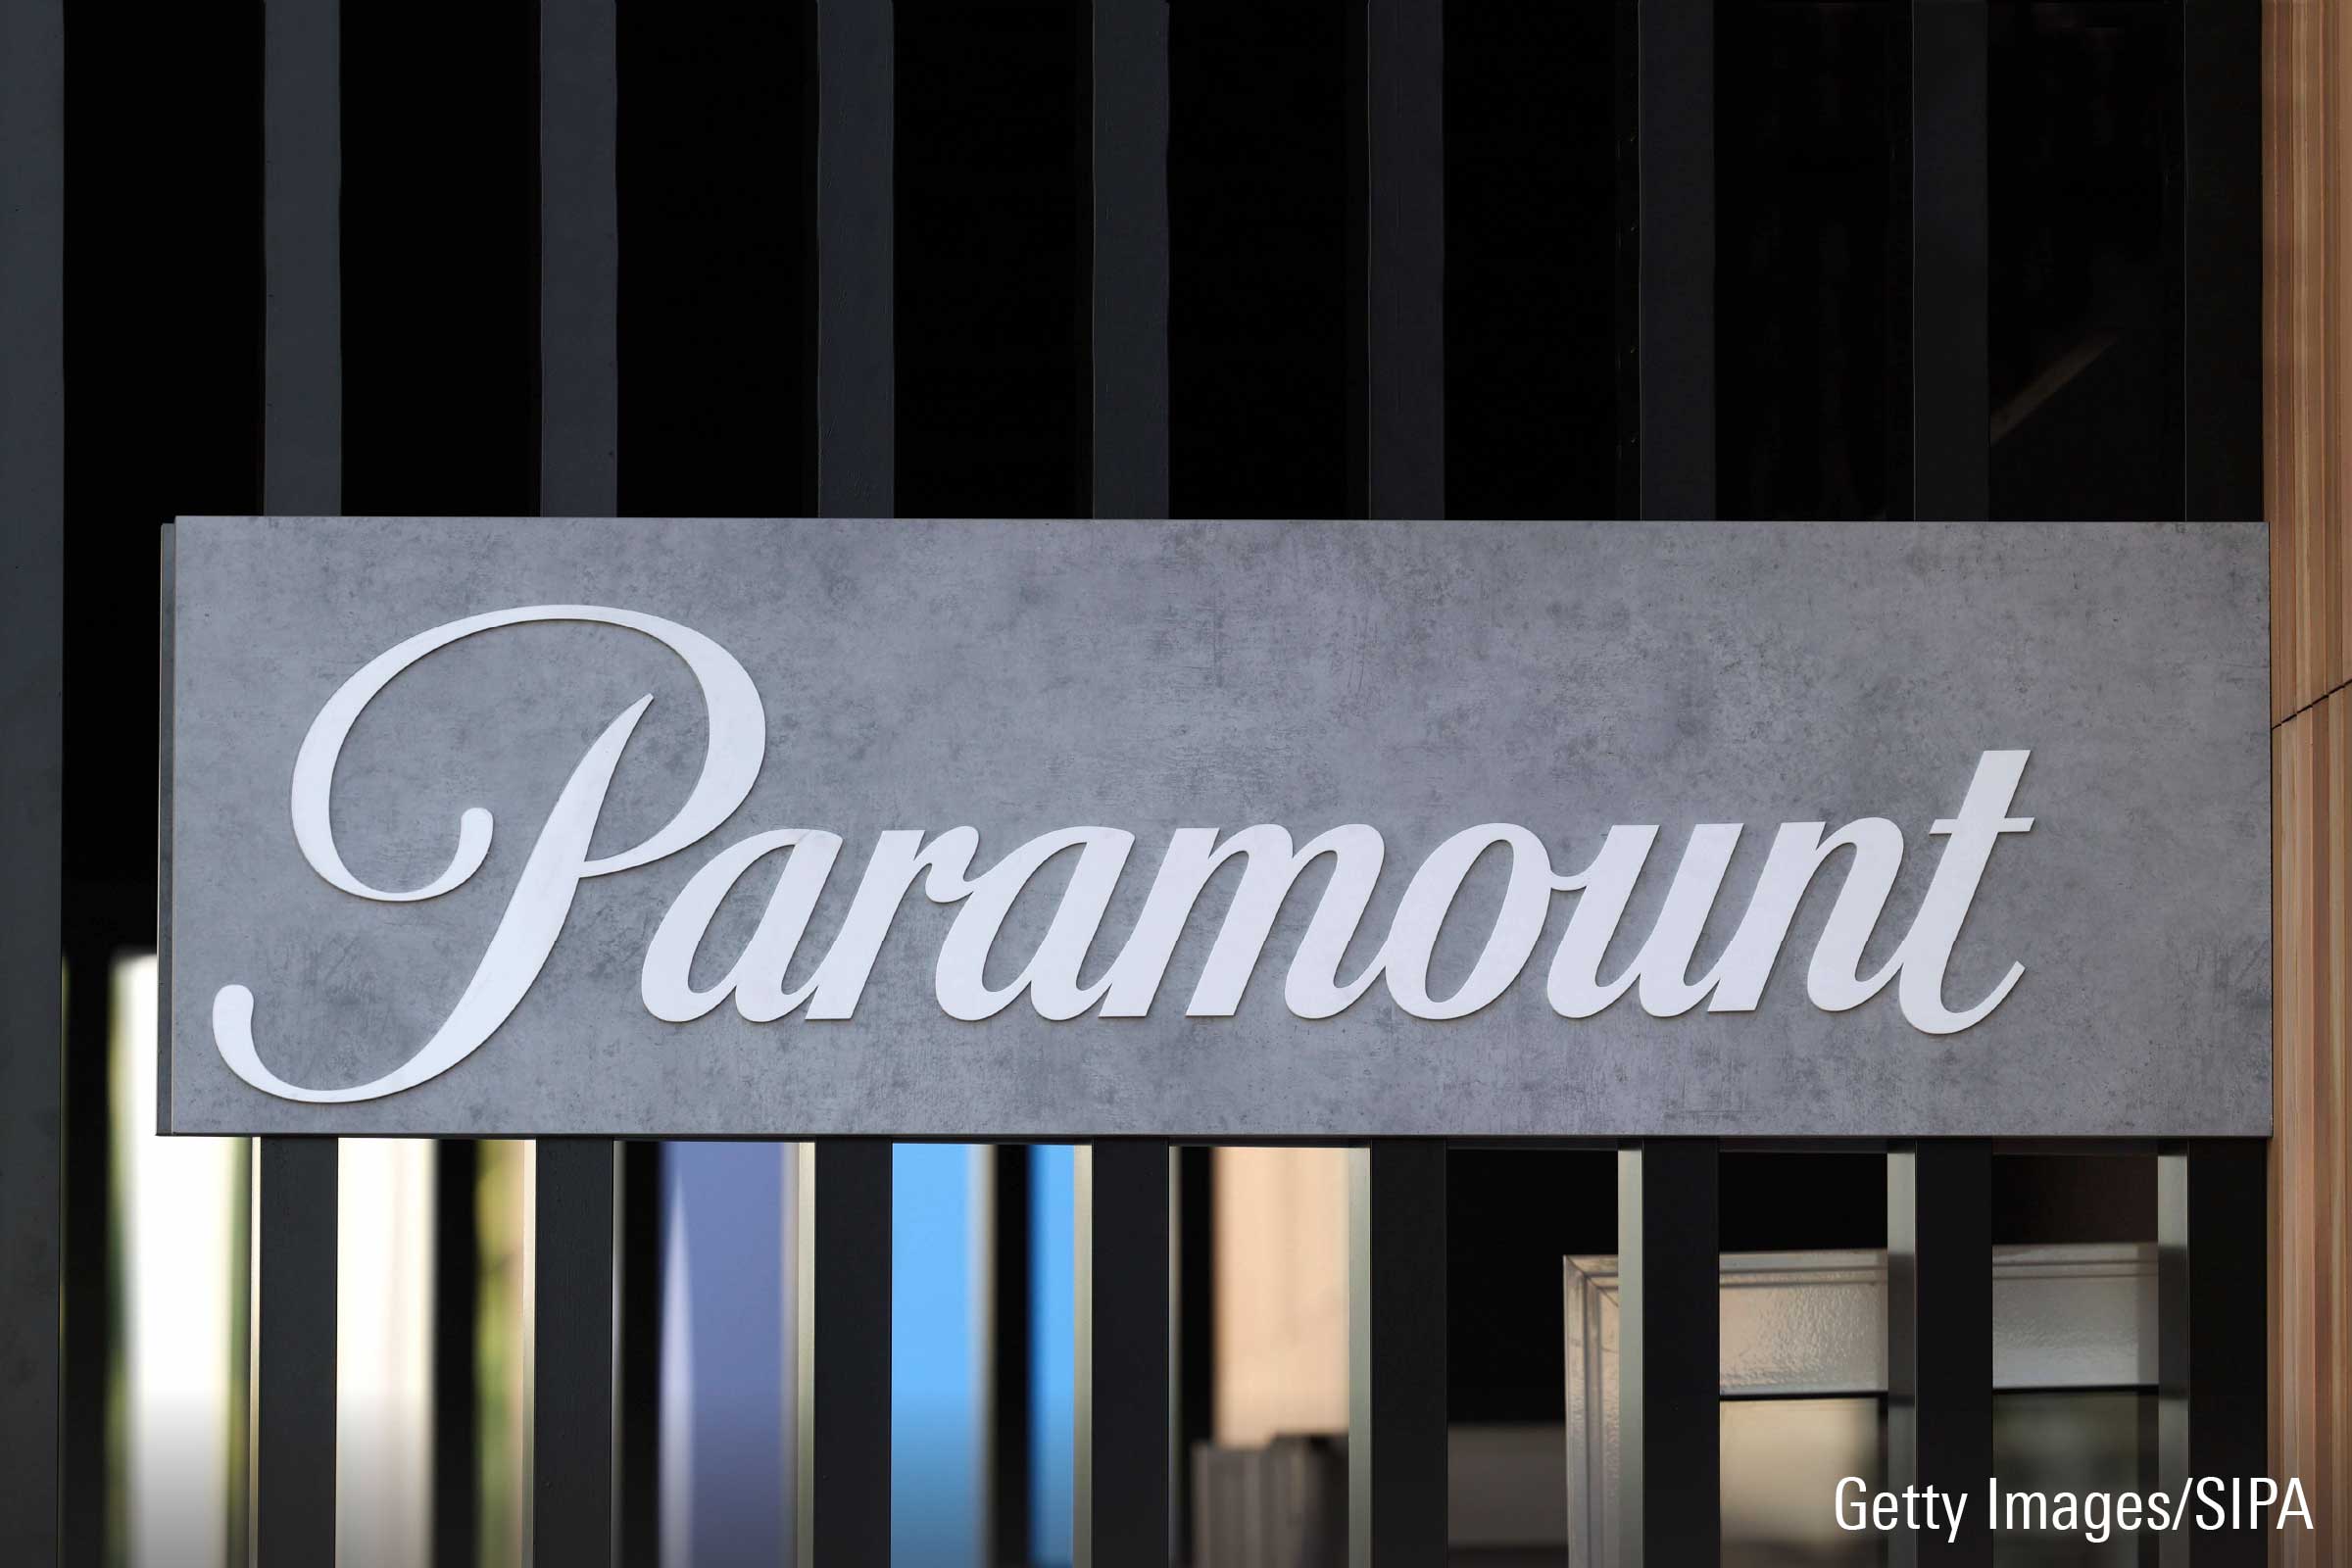 Paramount logo on a sign.